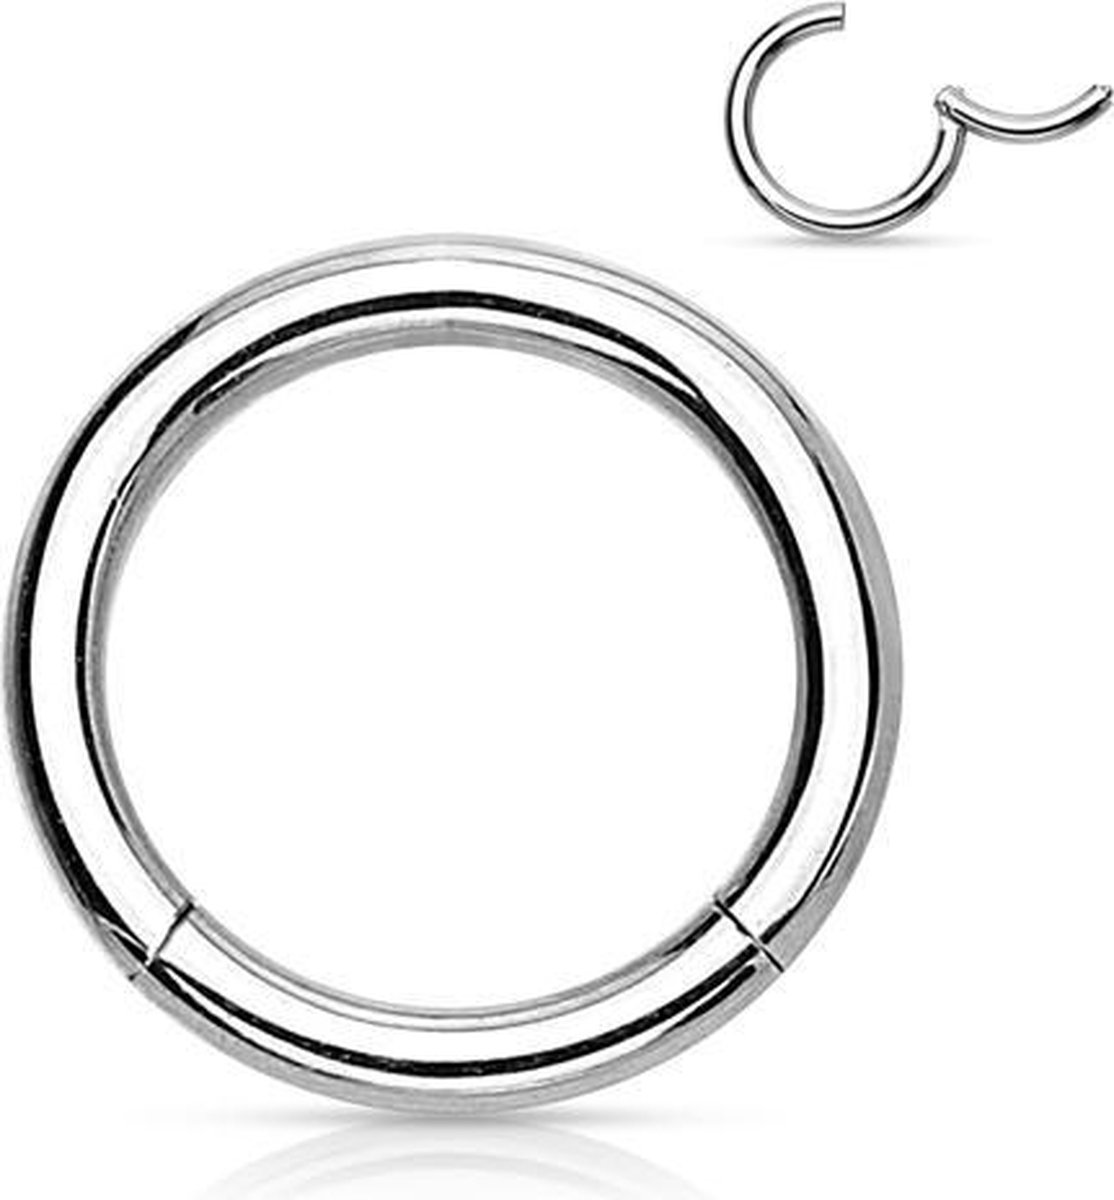 Rook piercing ring high quality 6mm - LMPiercings NL